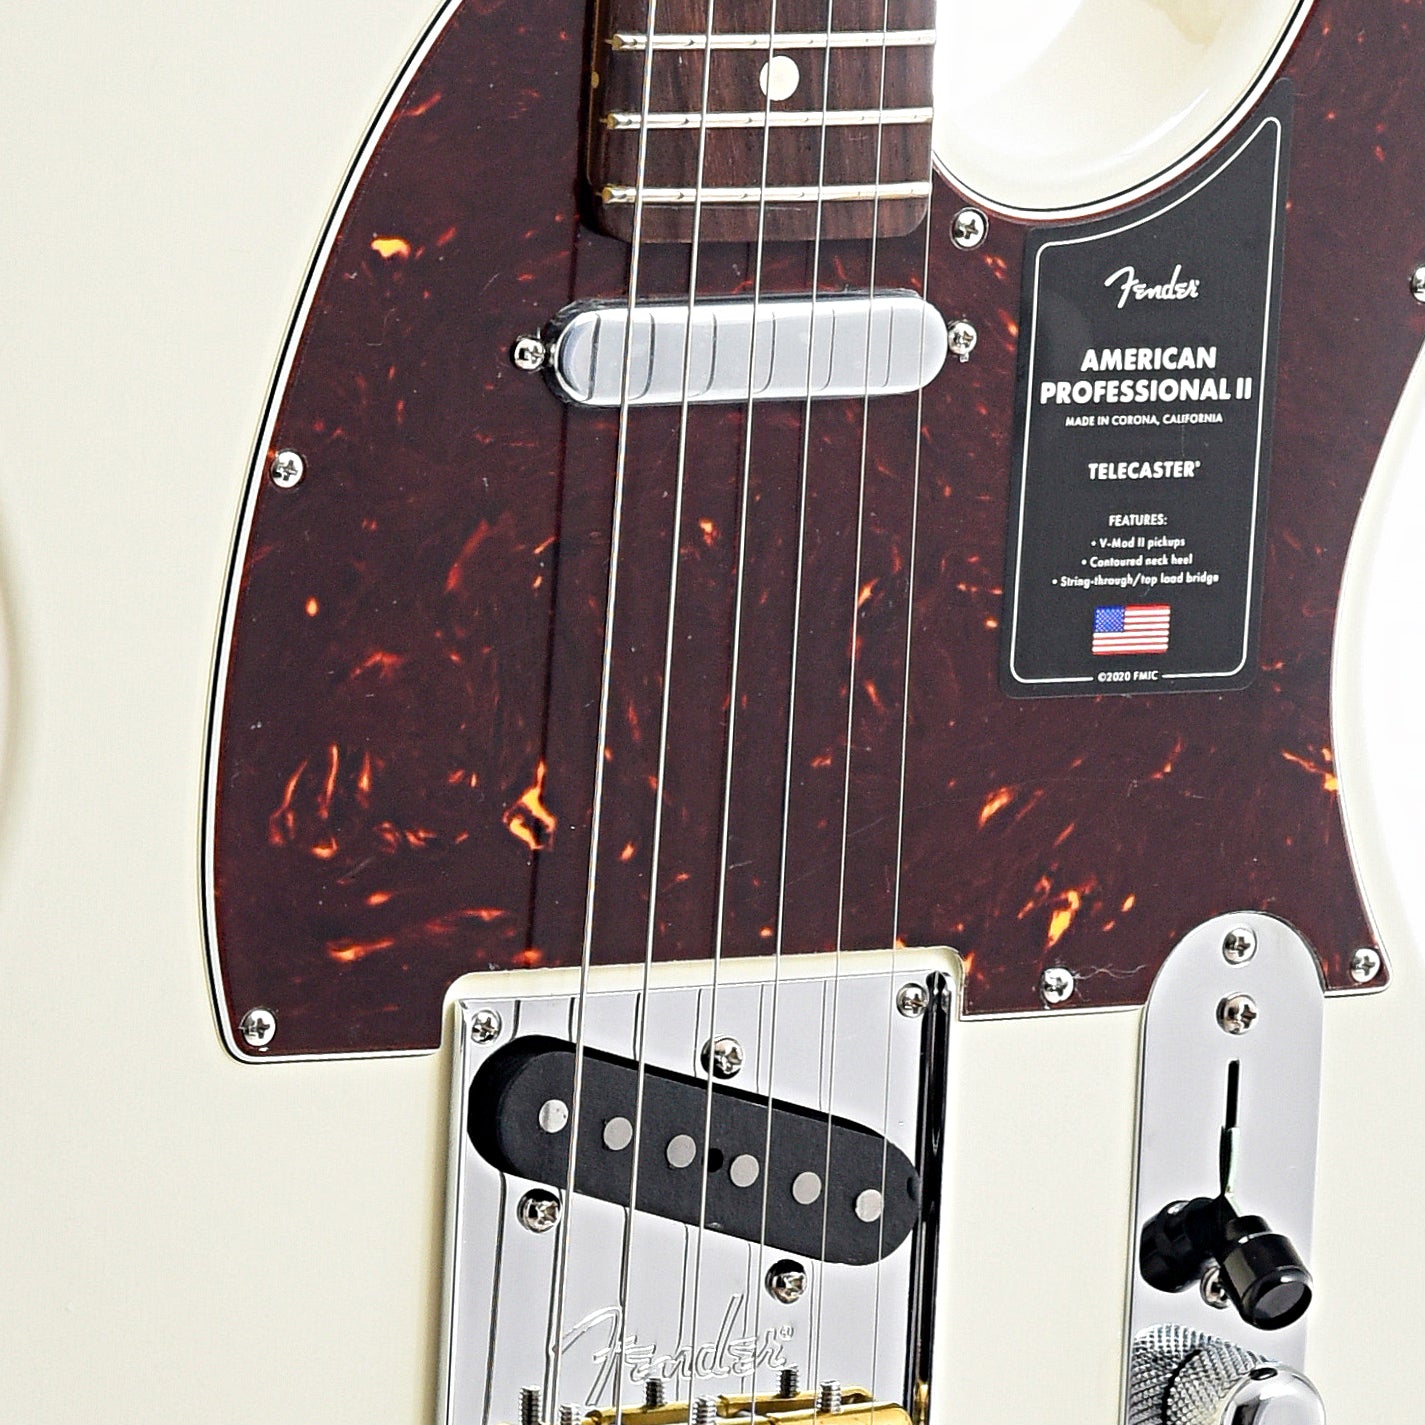 Pickups of Fender American Professional II Telecaster